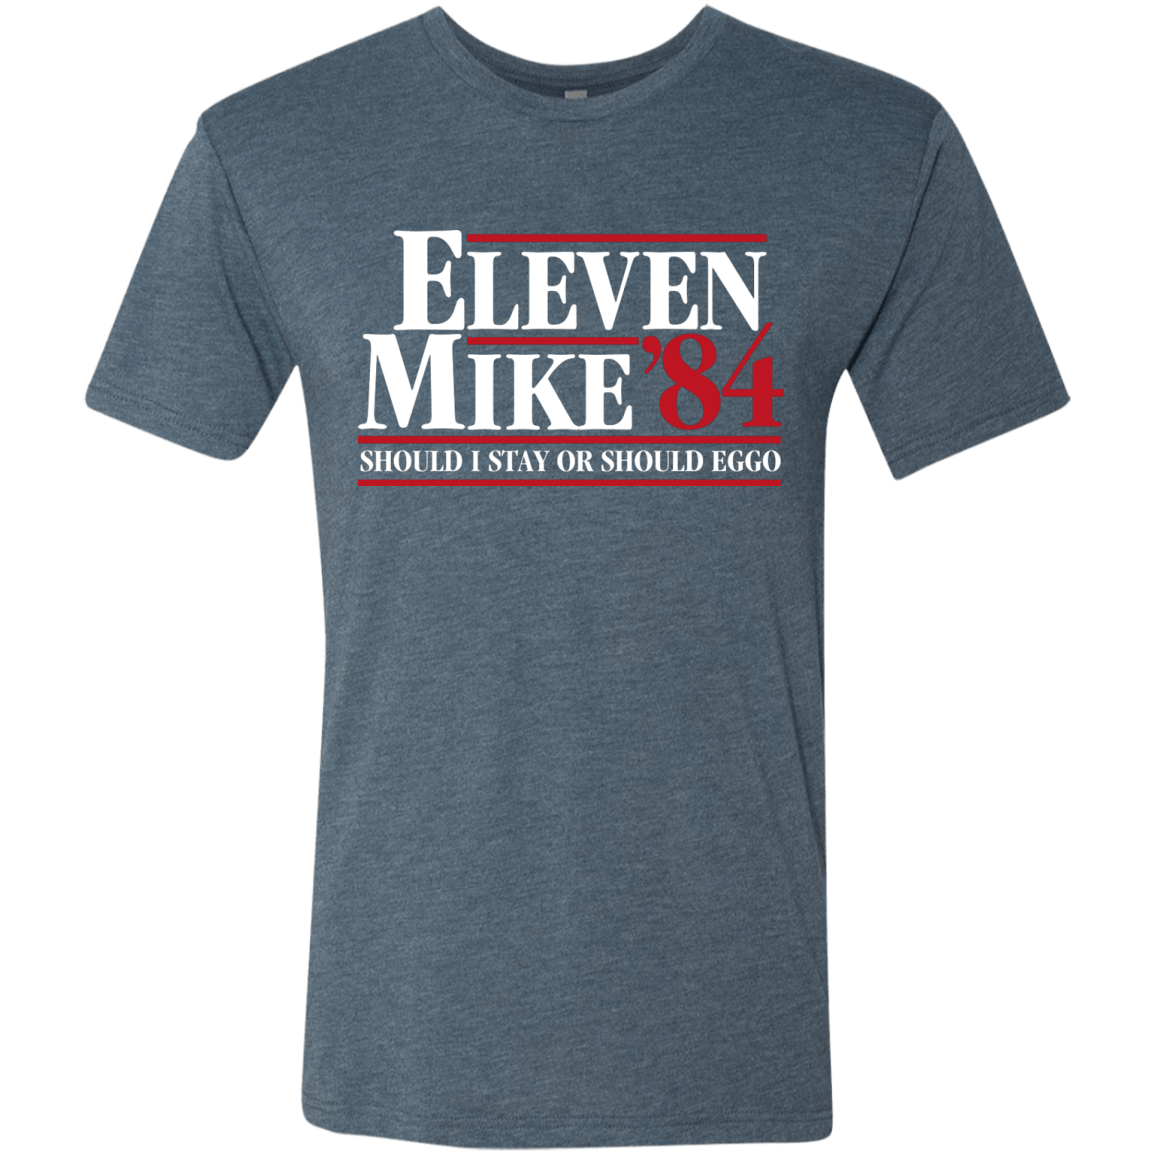 T-Shirts Indigo / Small Eleven Mike 84 - Should I Stay or Should Eggo Men's Triblend T-Shirt